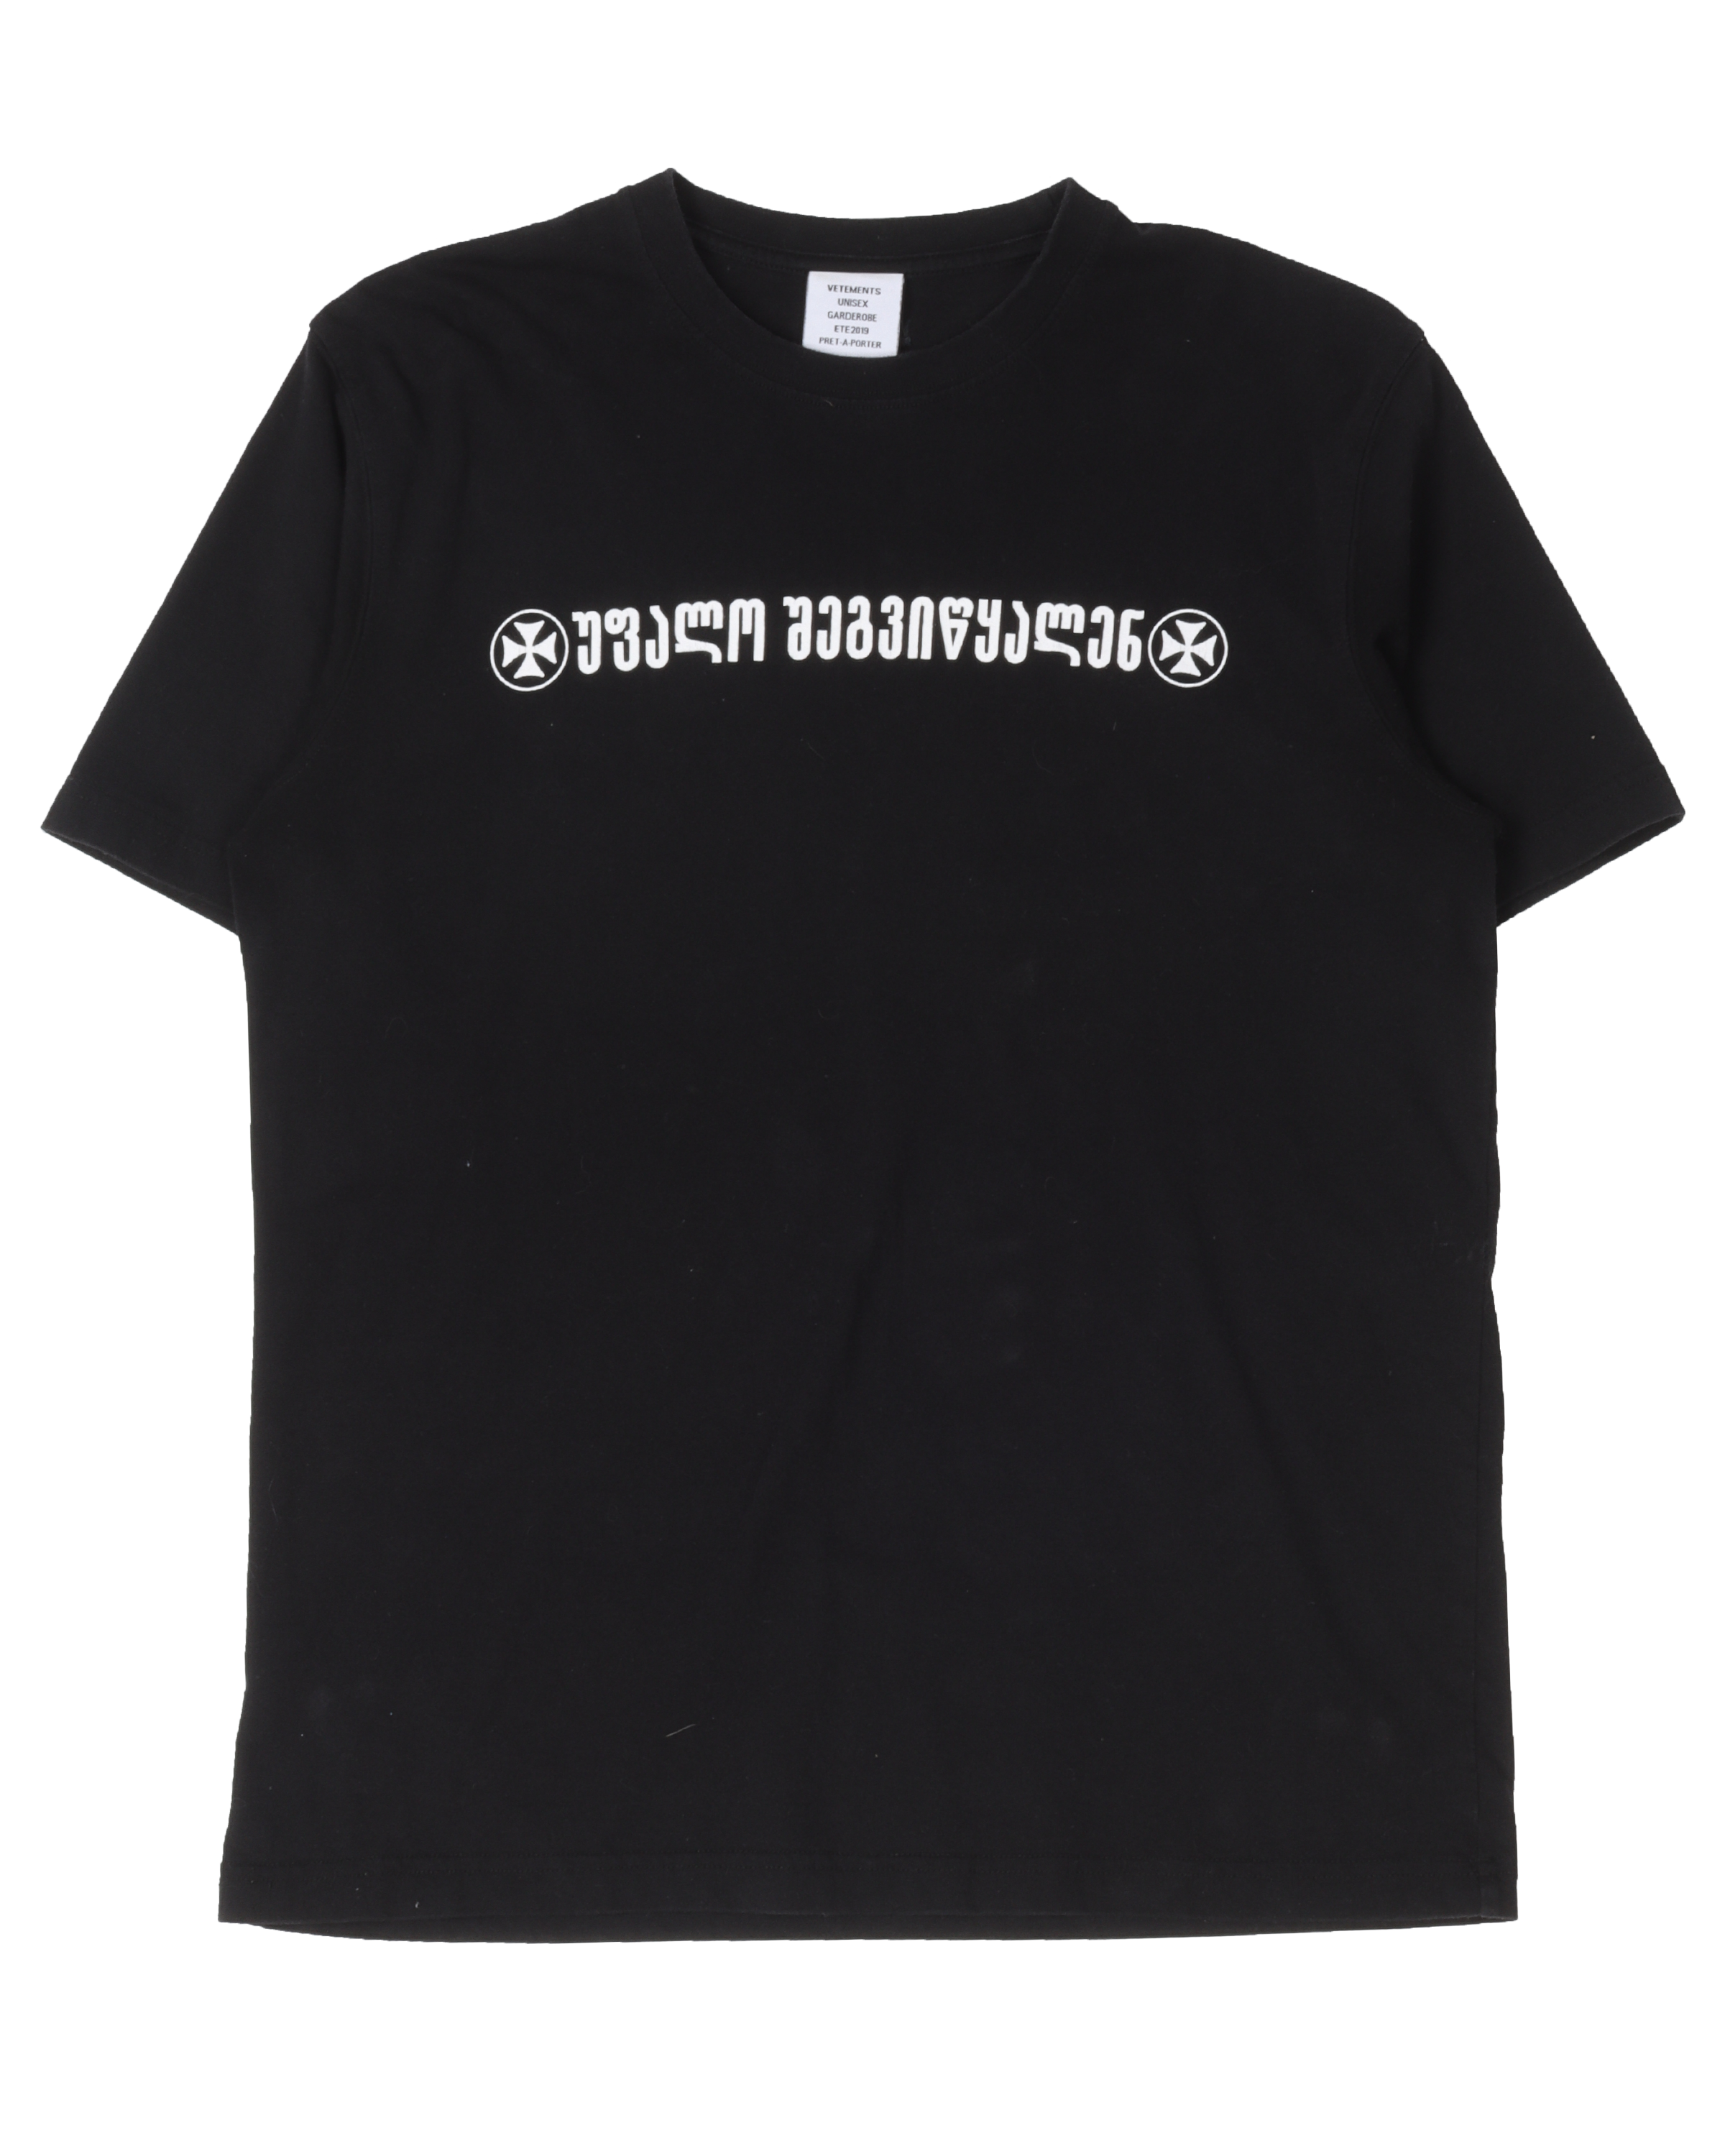 Georgian Text T-Shirt